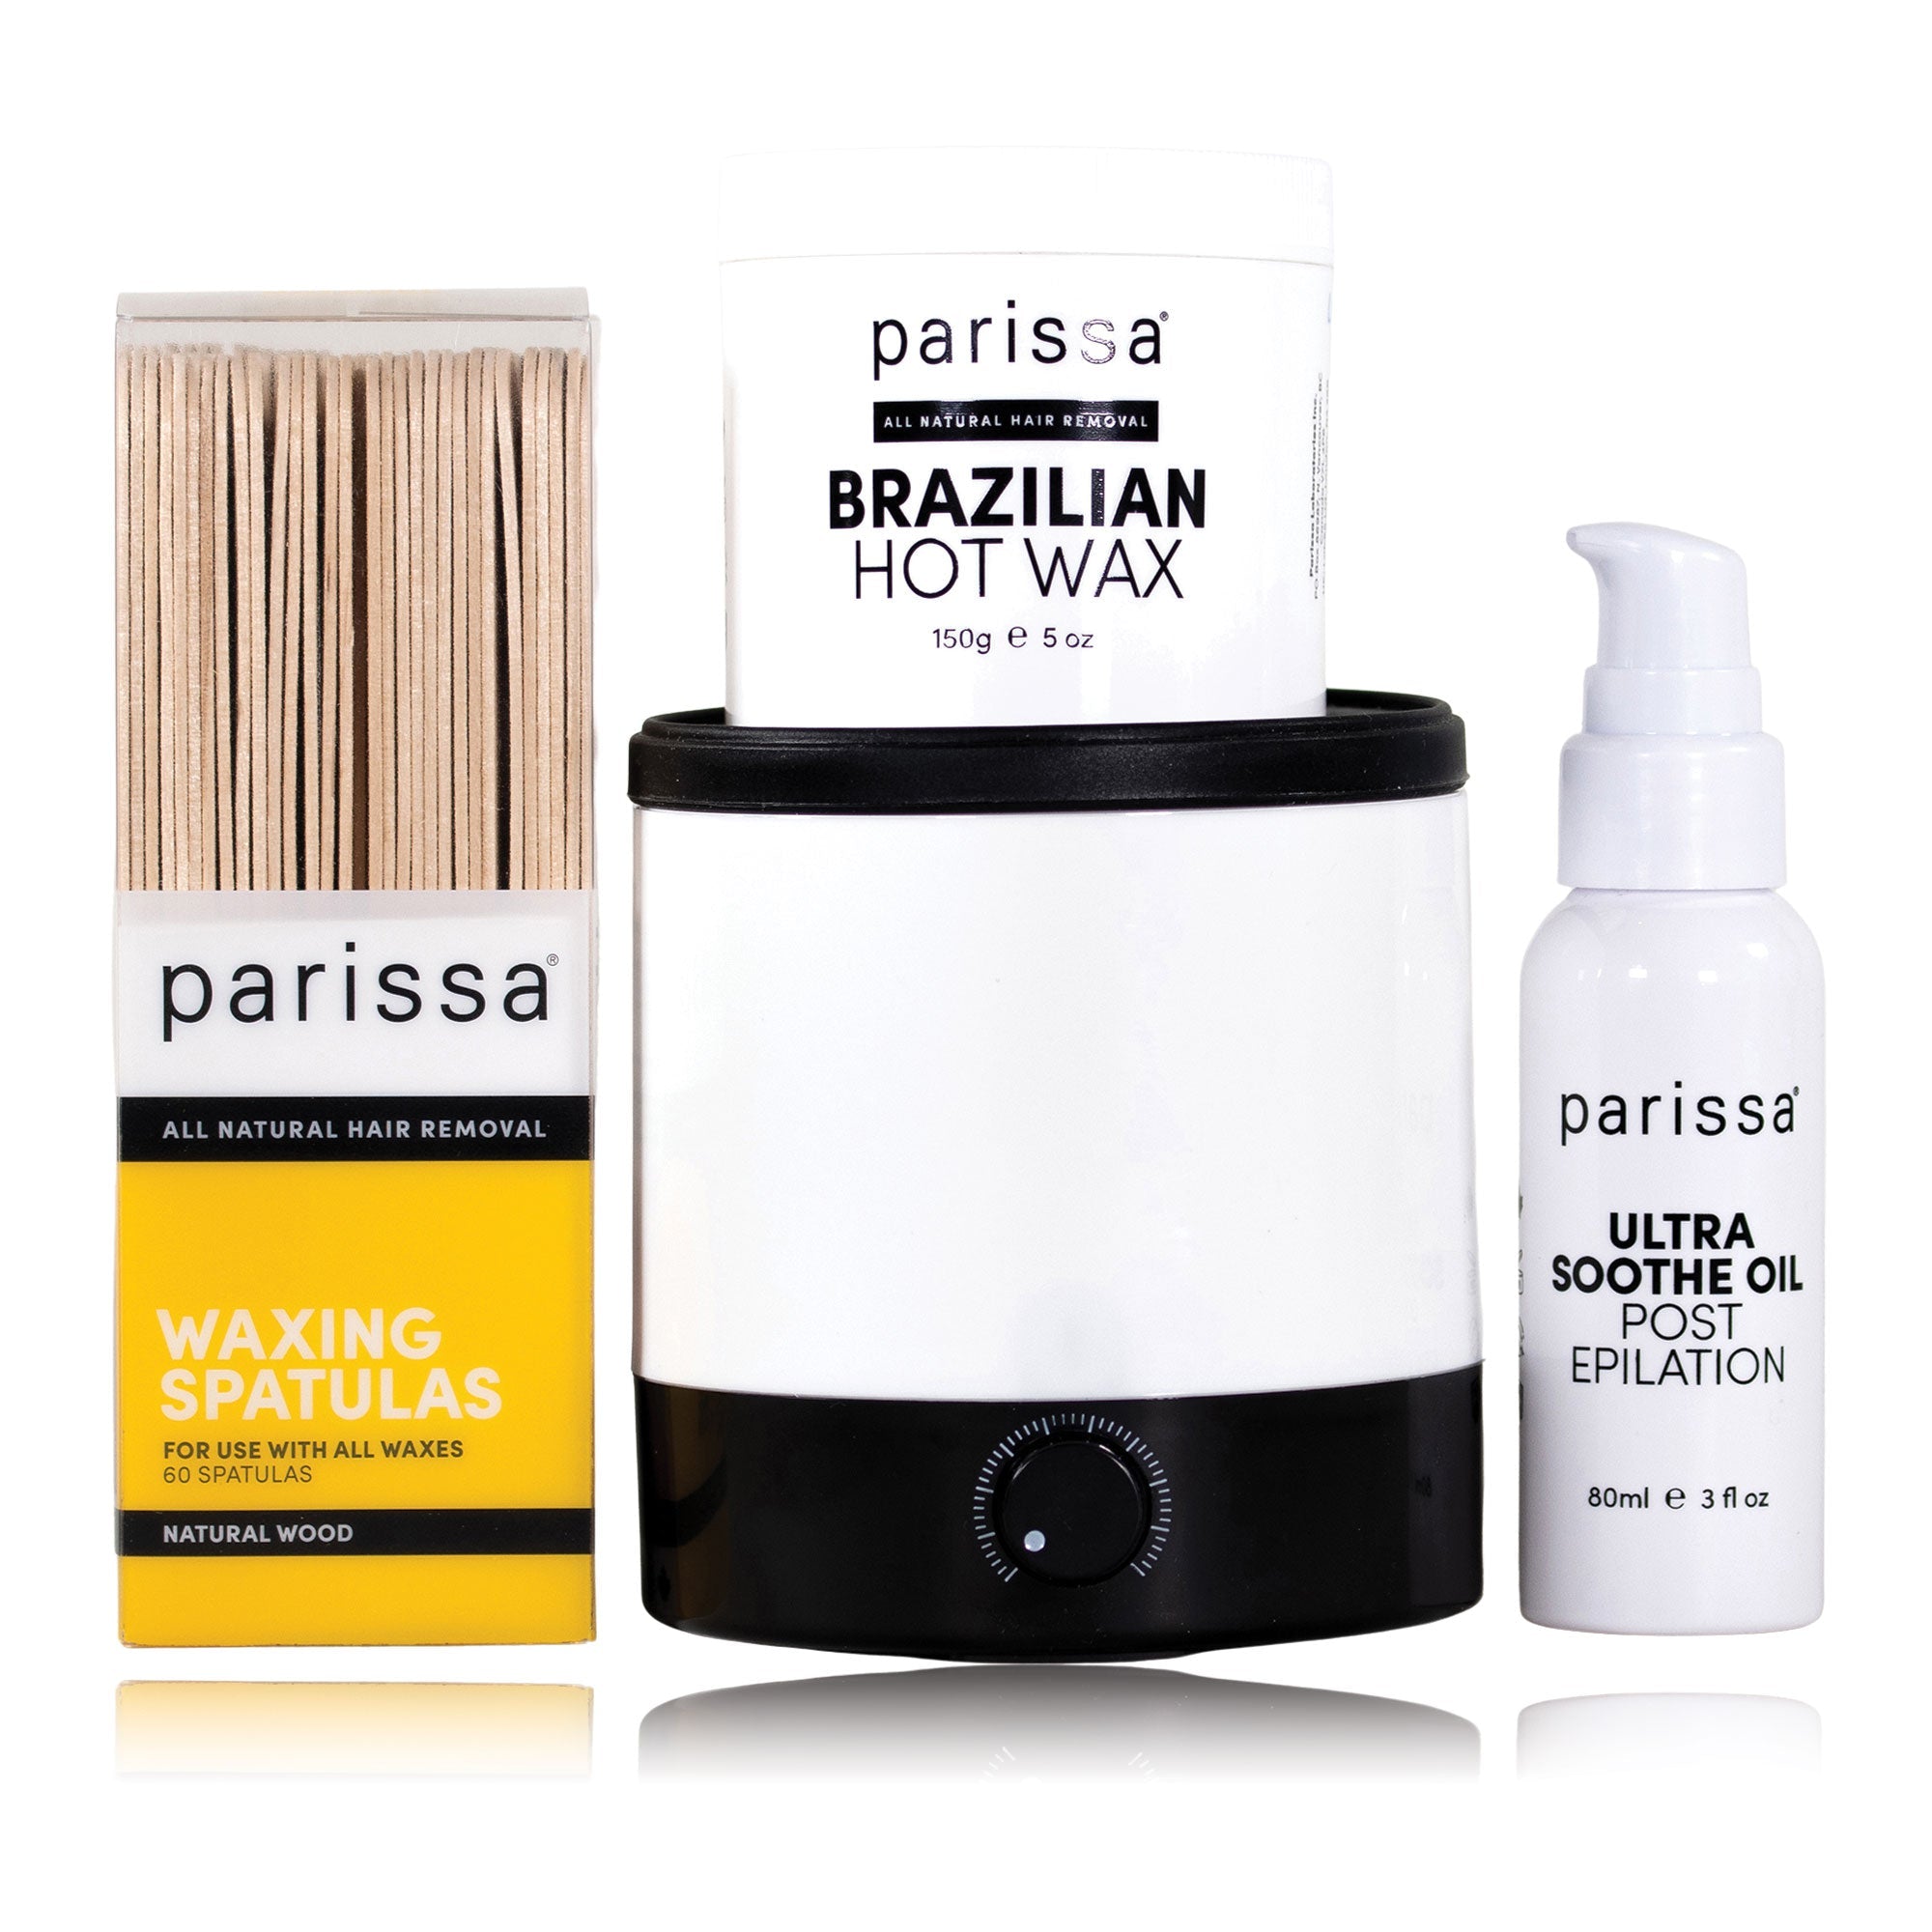 Brazilian Breeze Hot Wax Set Bundle Parissa 